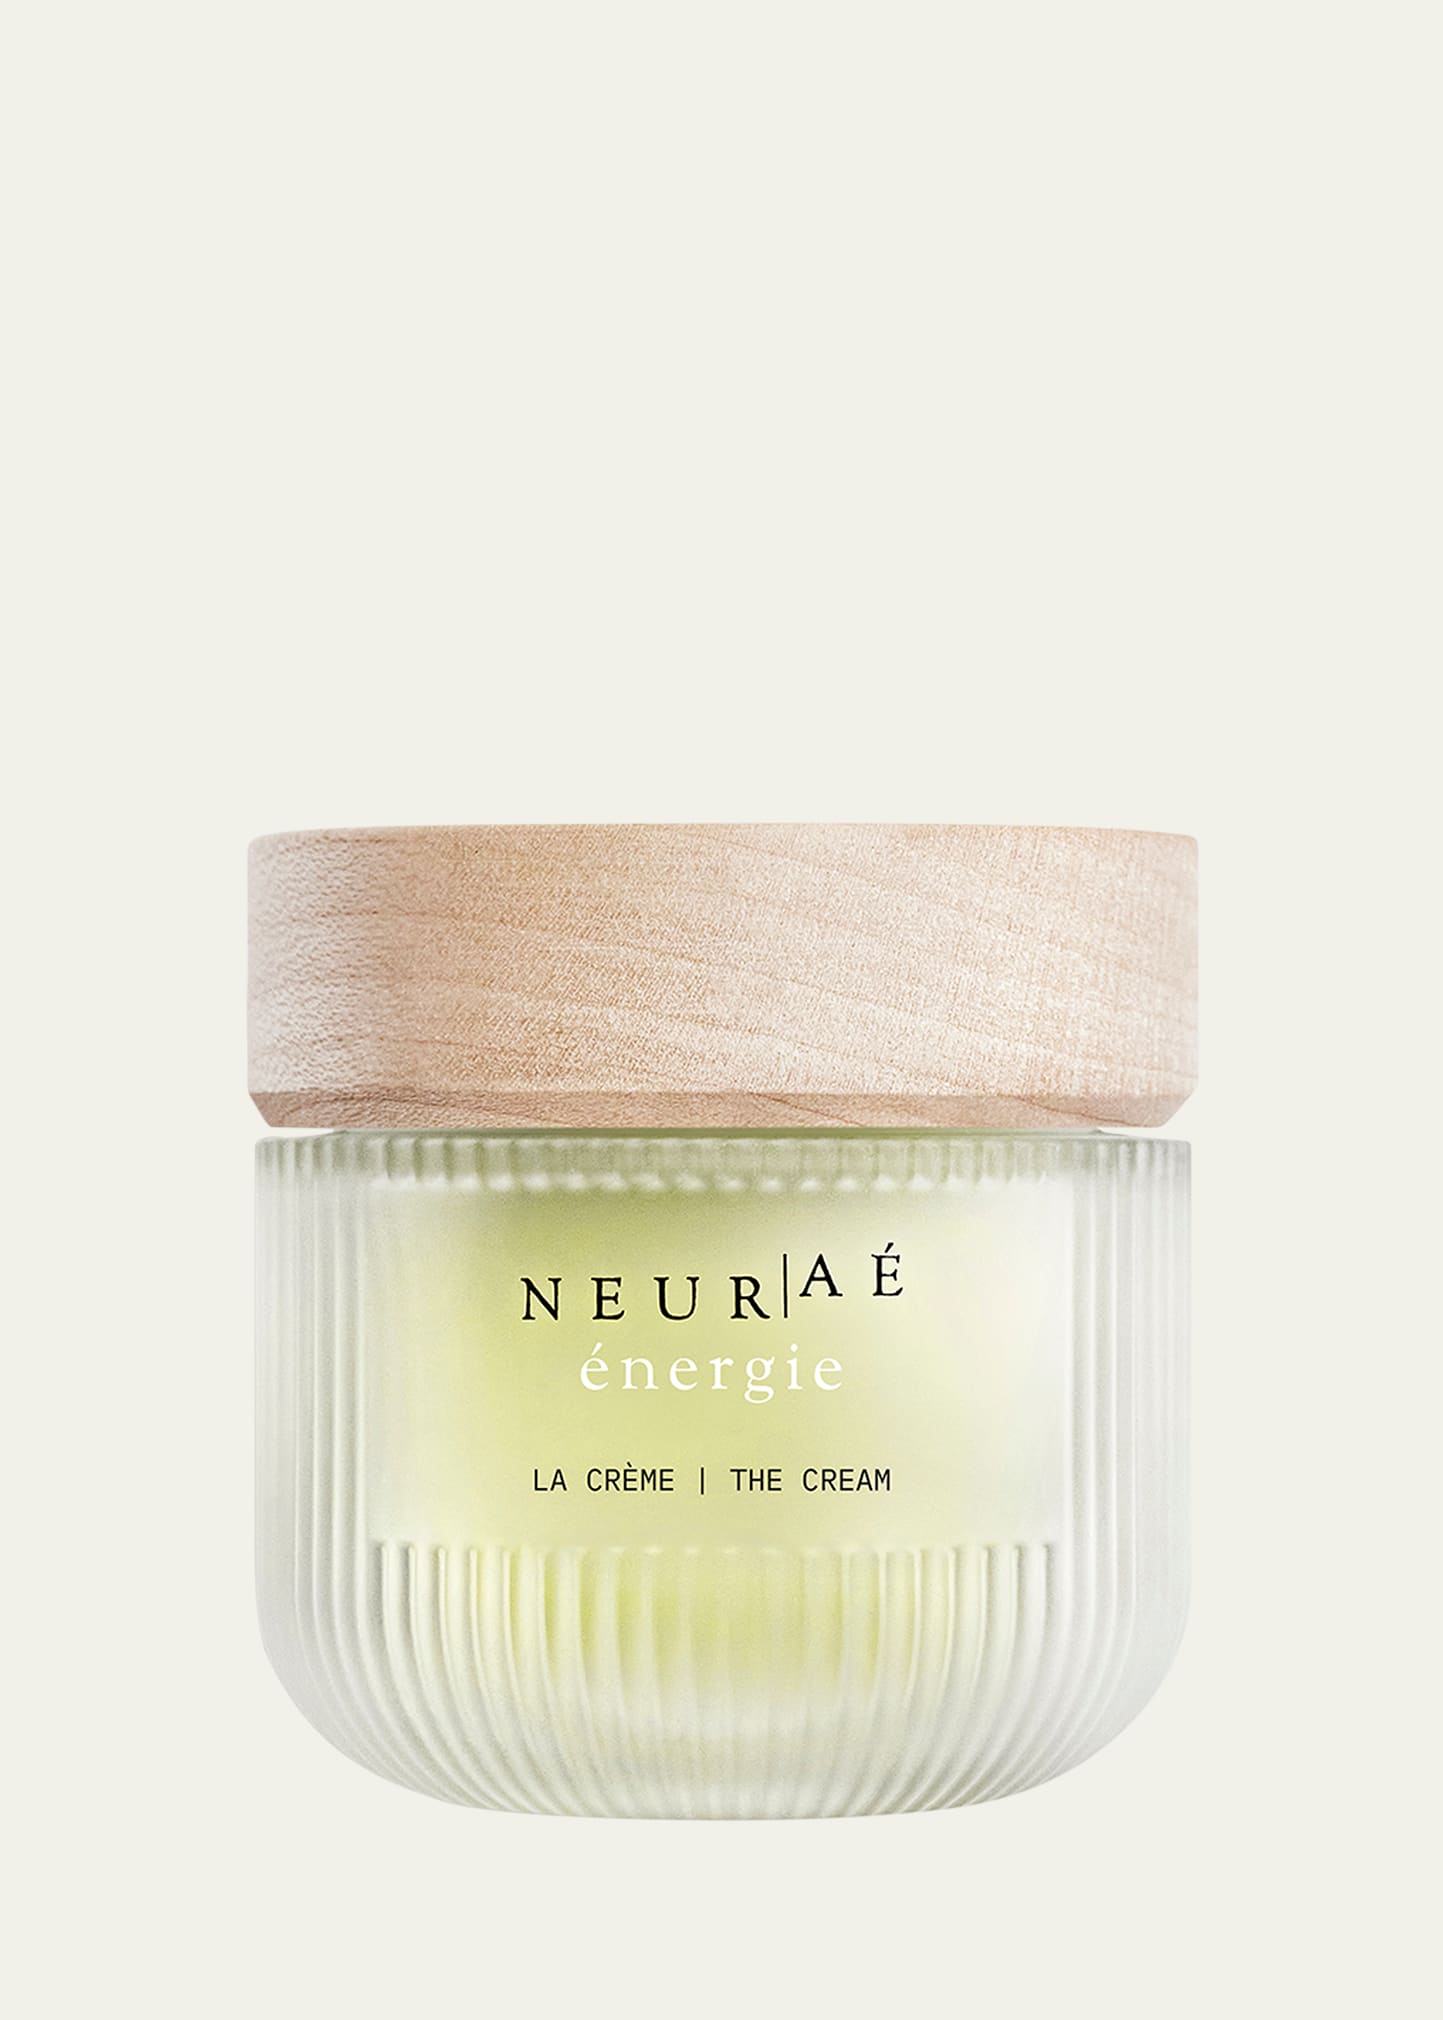 Neurae Nergie - La Crme The Cream In White